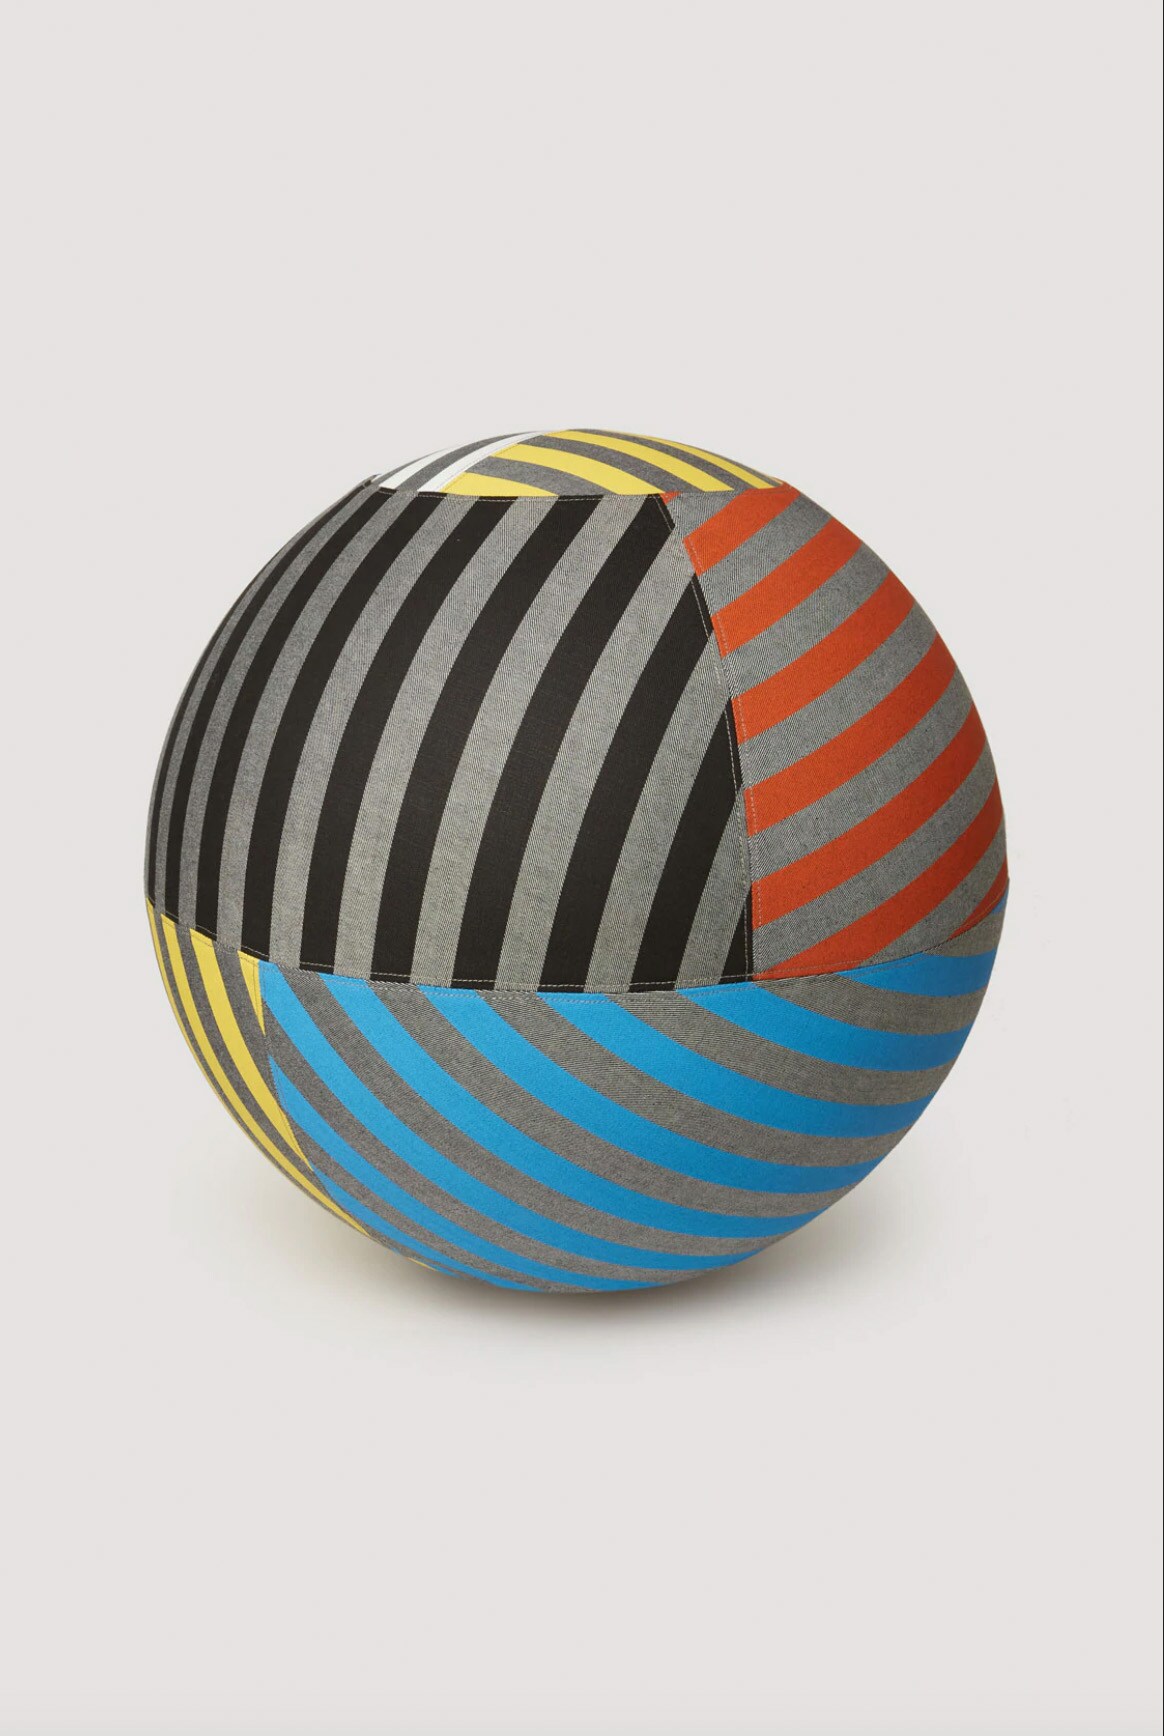 Palla da ginnastica Almost-Swiss Ball, SUNNEI (450 €).